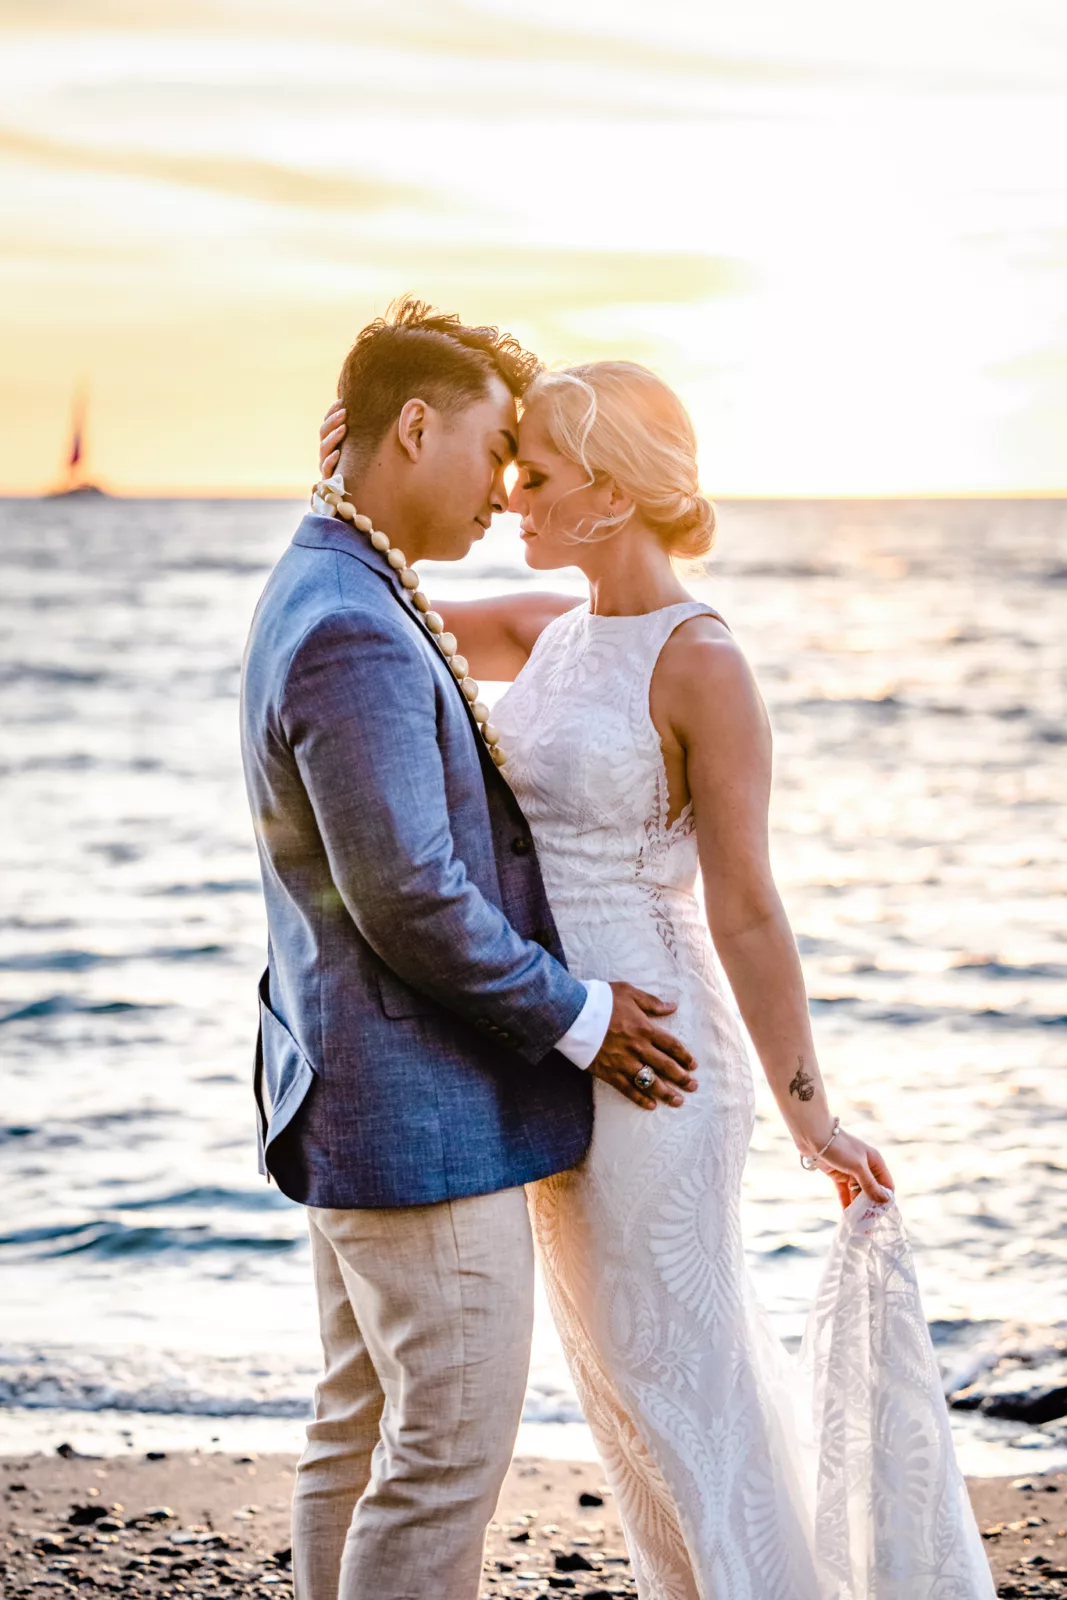 Sailboat behind bride and groom after Big Island wedding